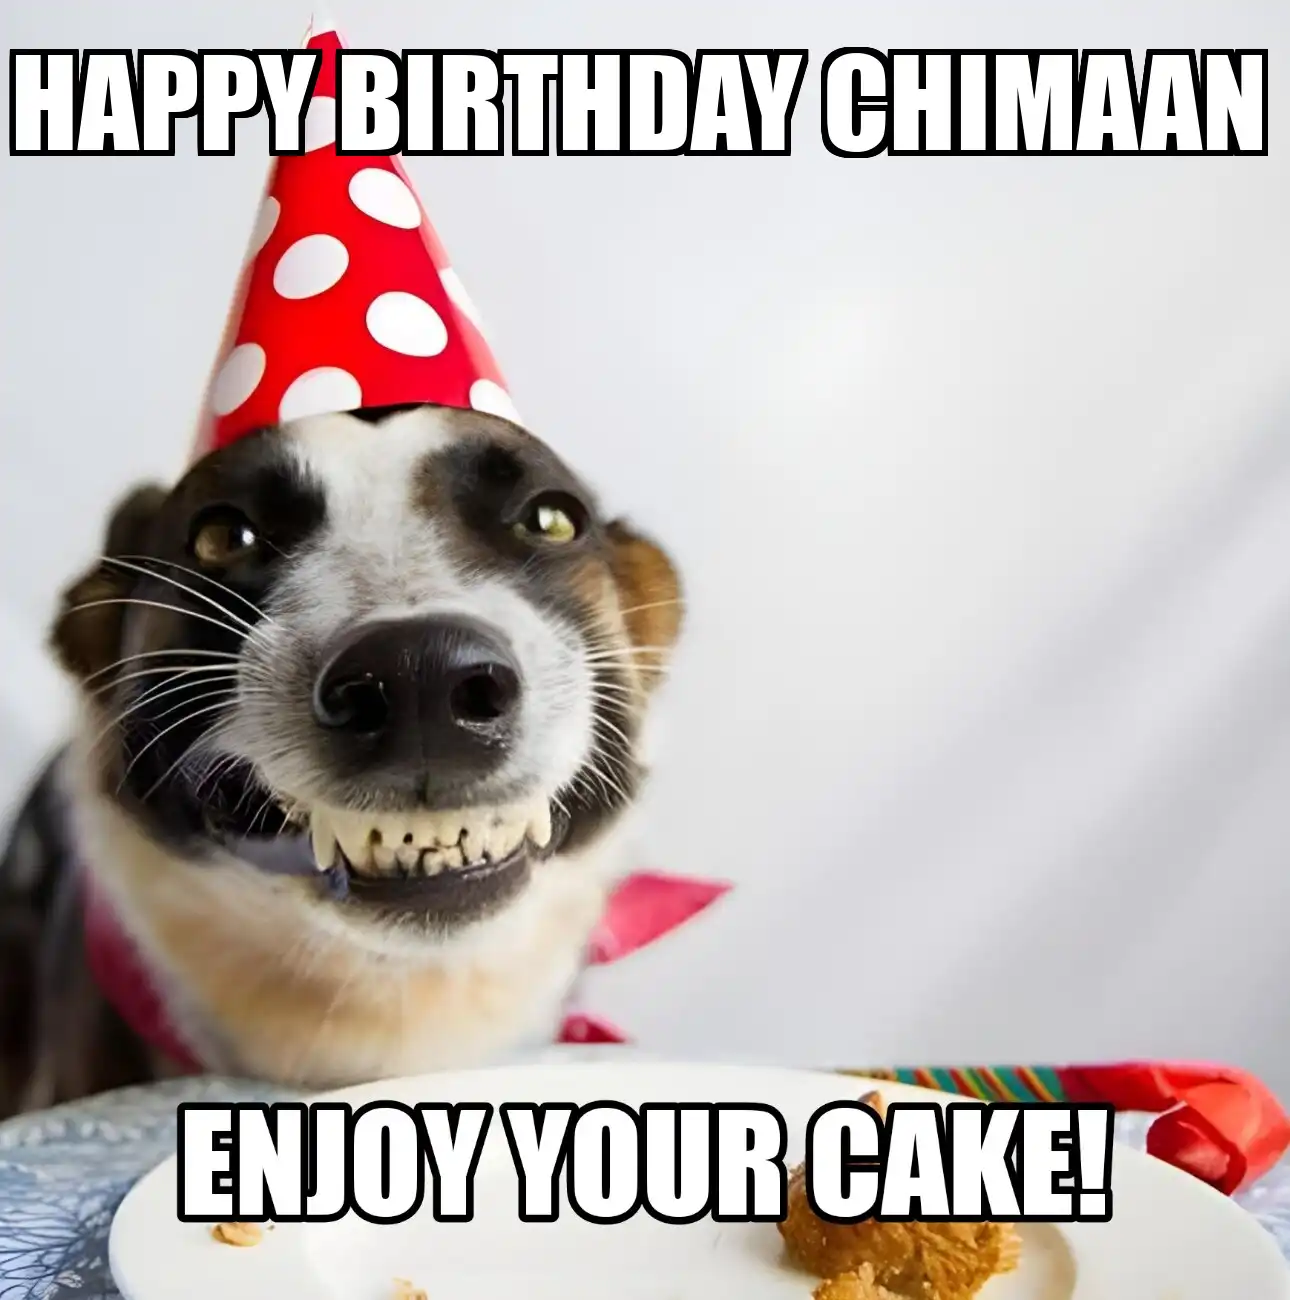 Happy Birthday Chimaan Enjoy Your Cake Dog Meme